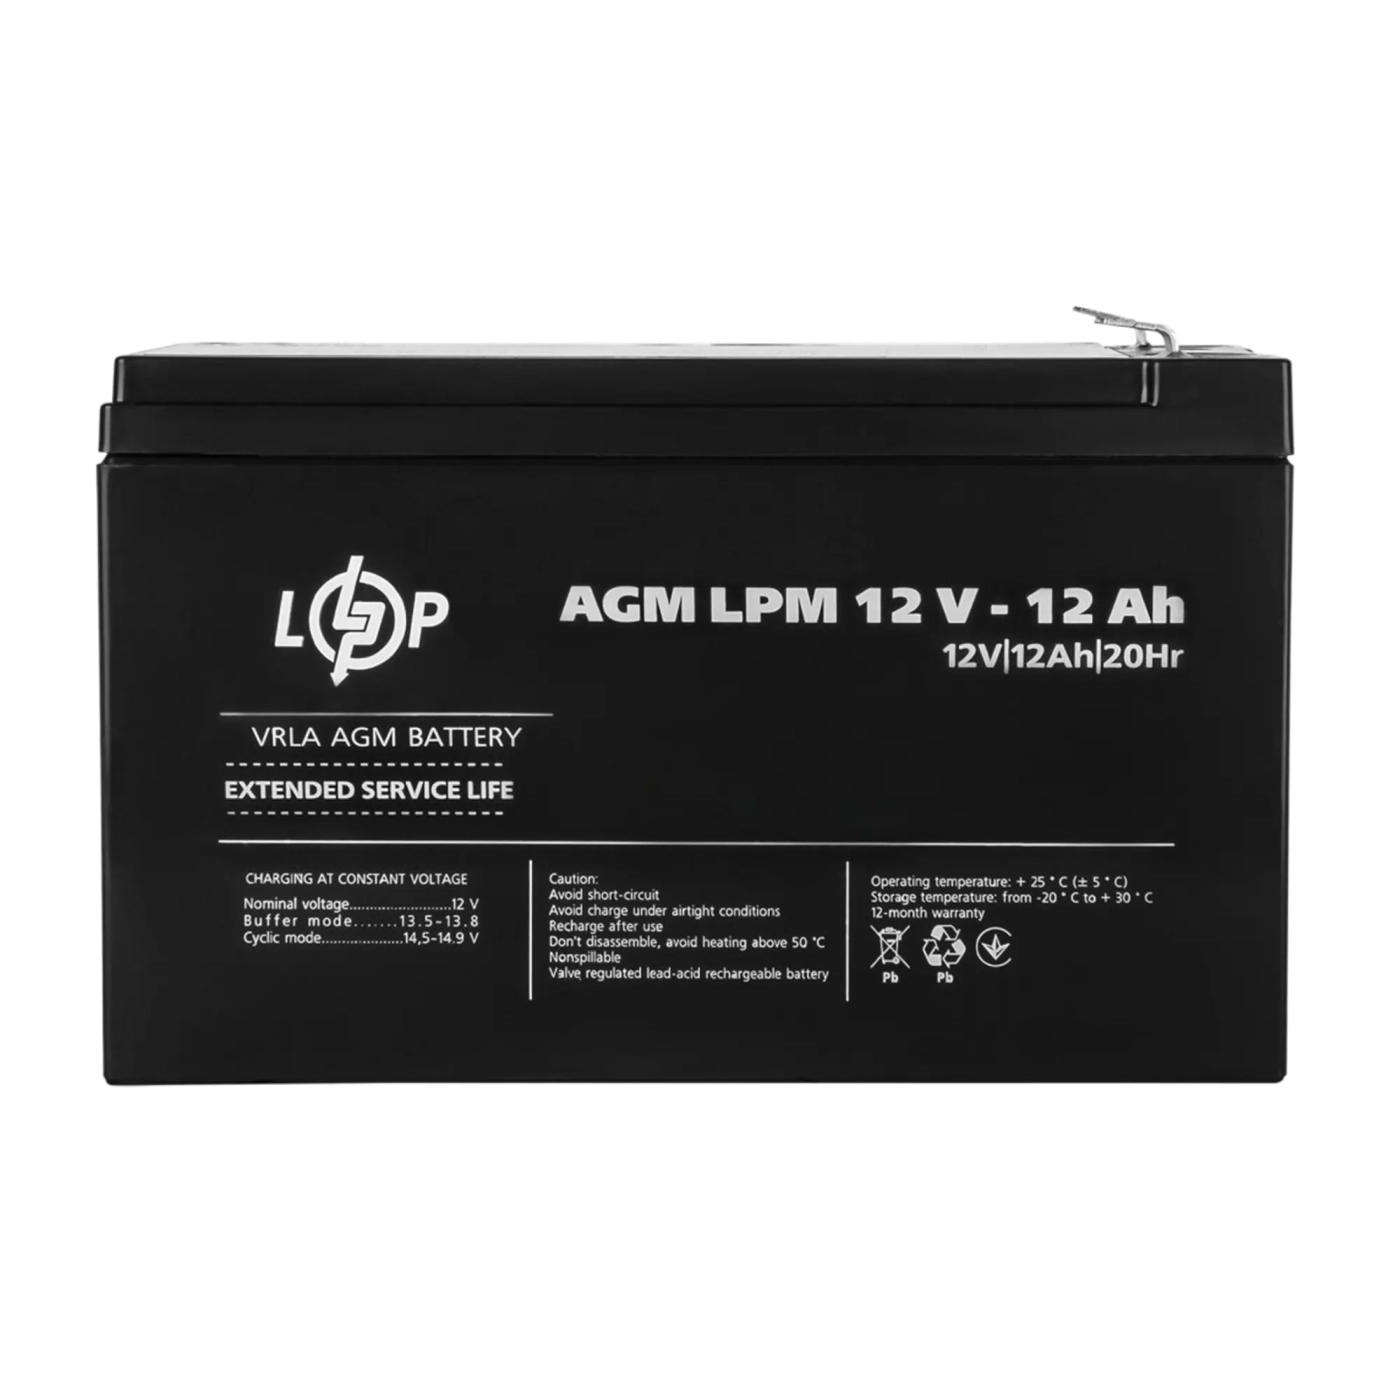 Купить Аккумулятор AGM LPM 12V 12Ah - фото 3